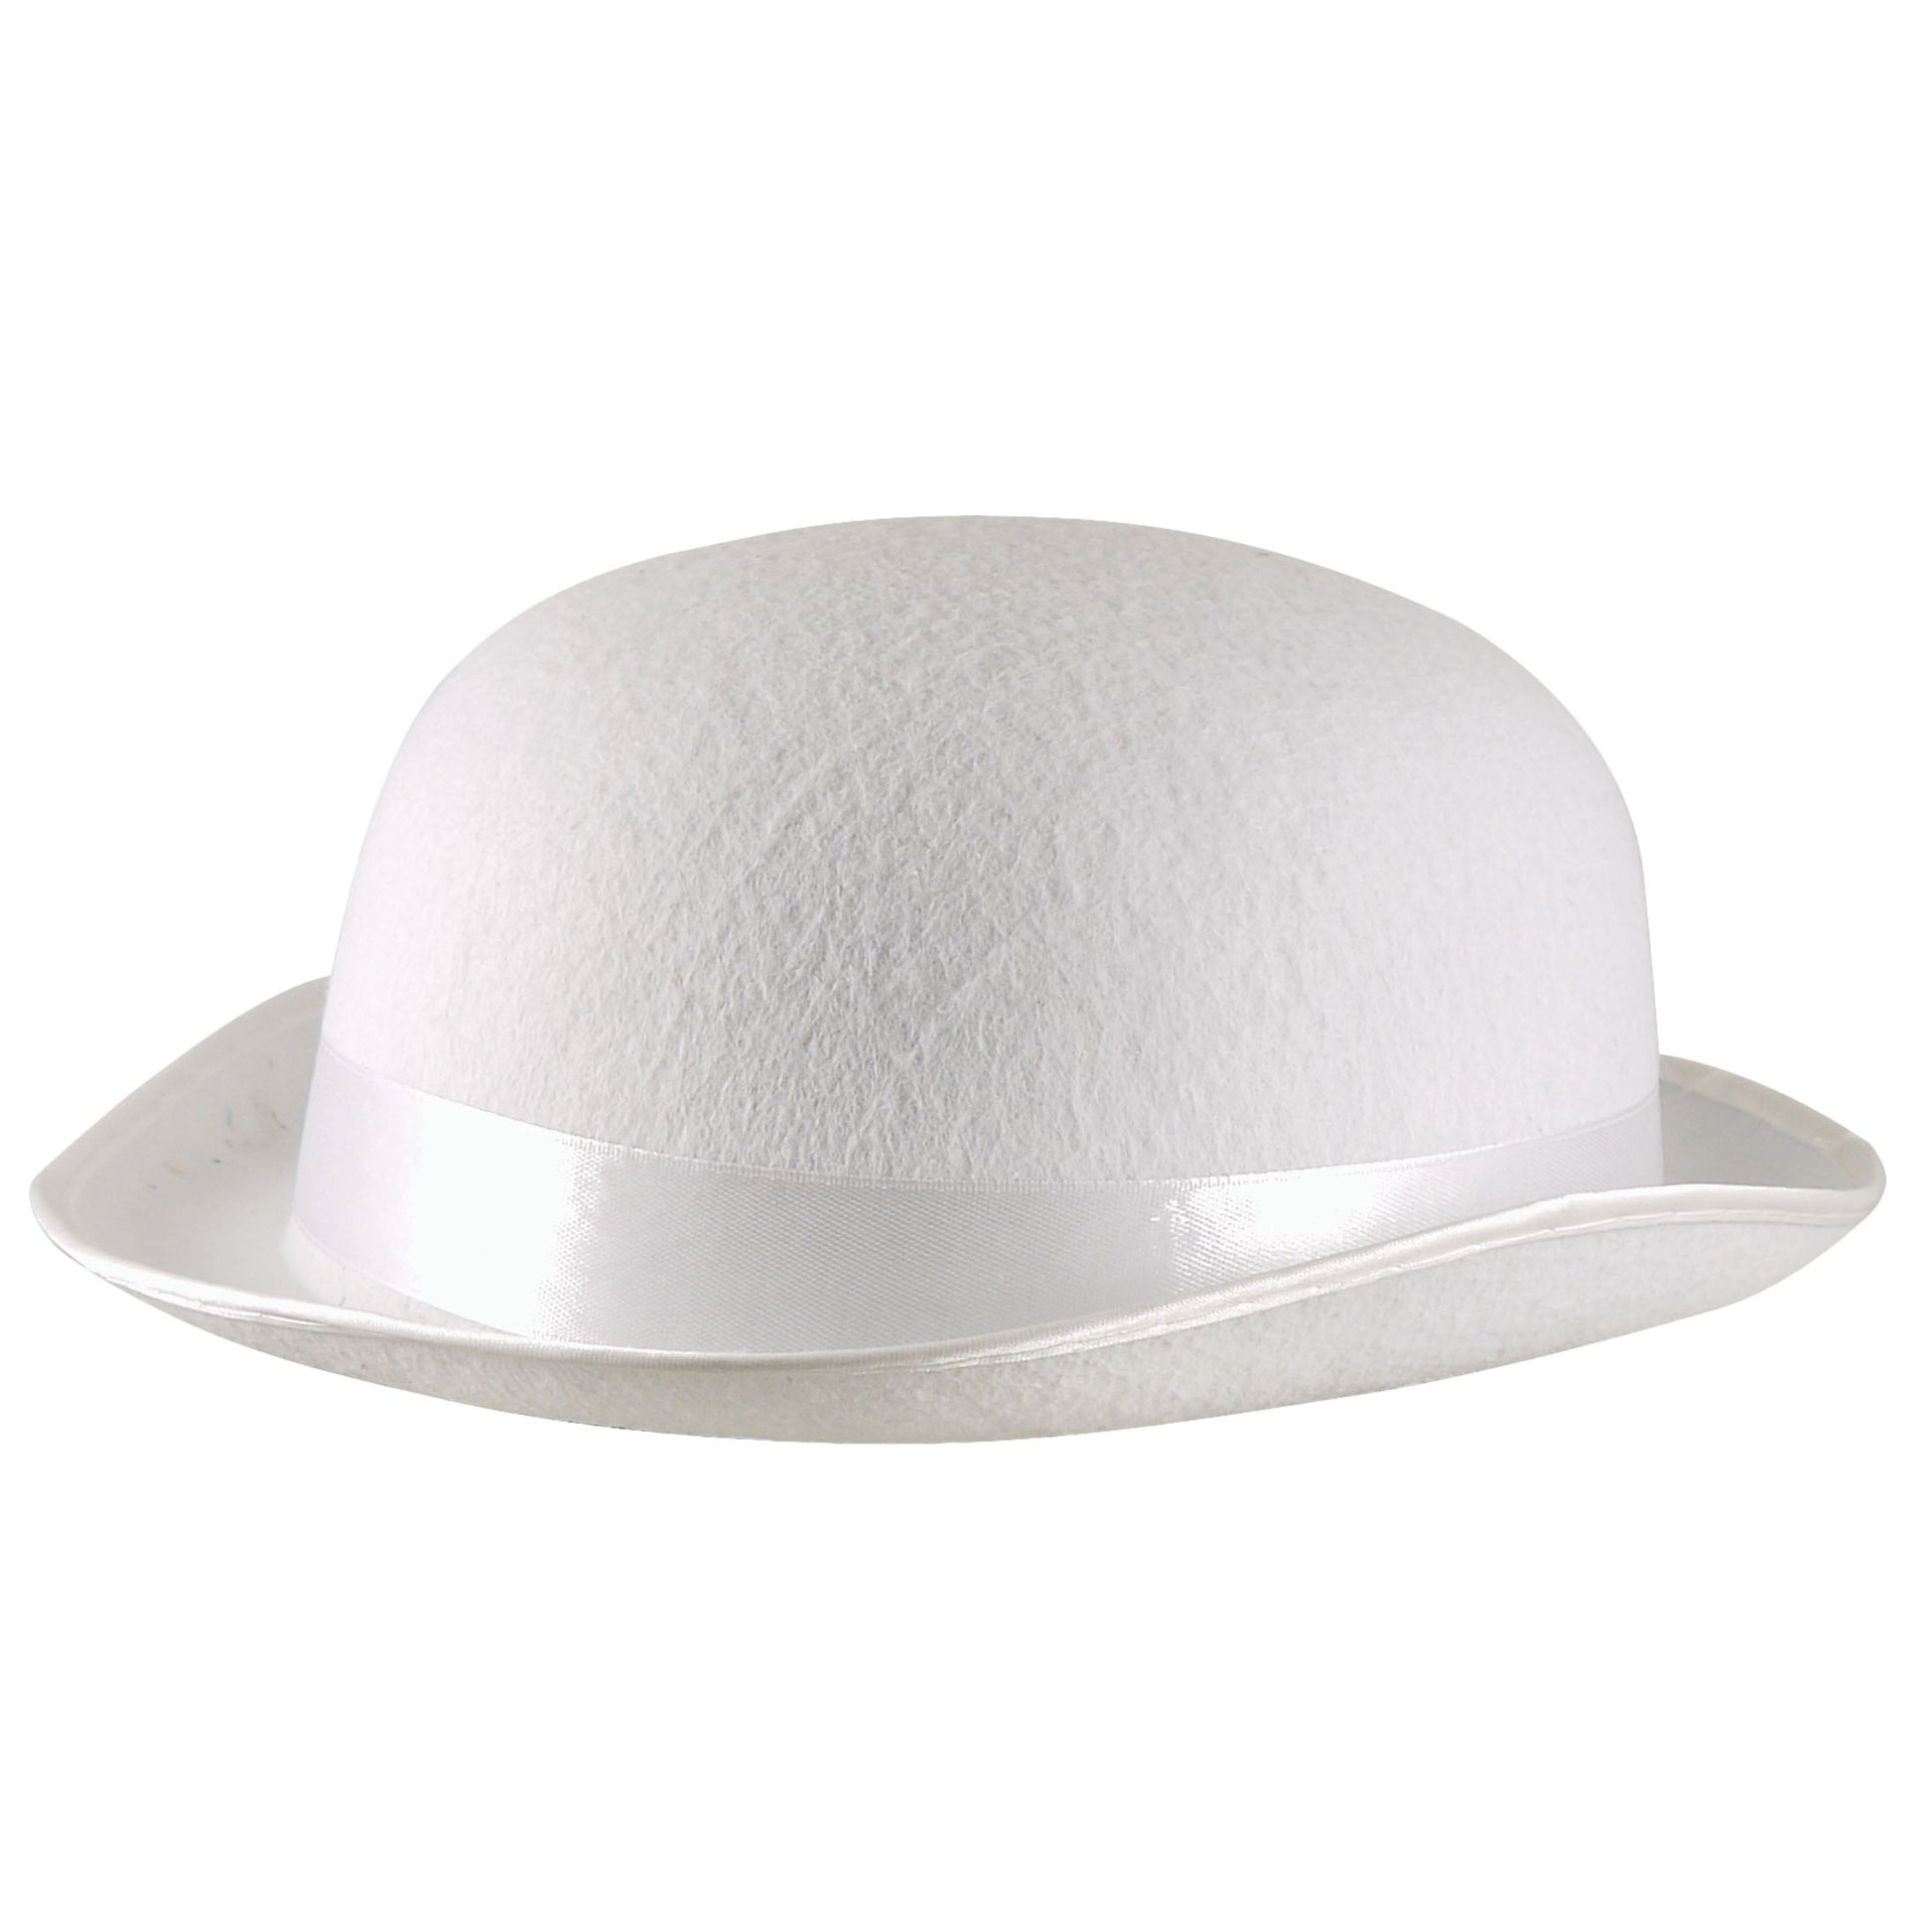 White Felt Bowler Hat with White Band